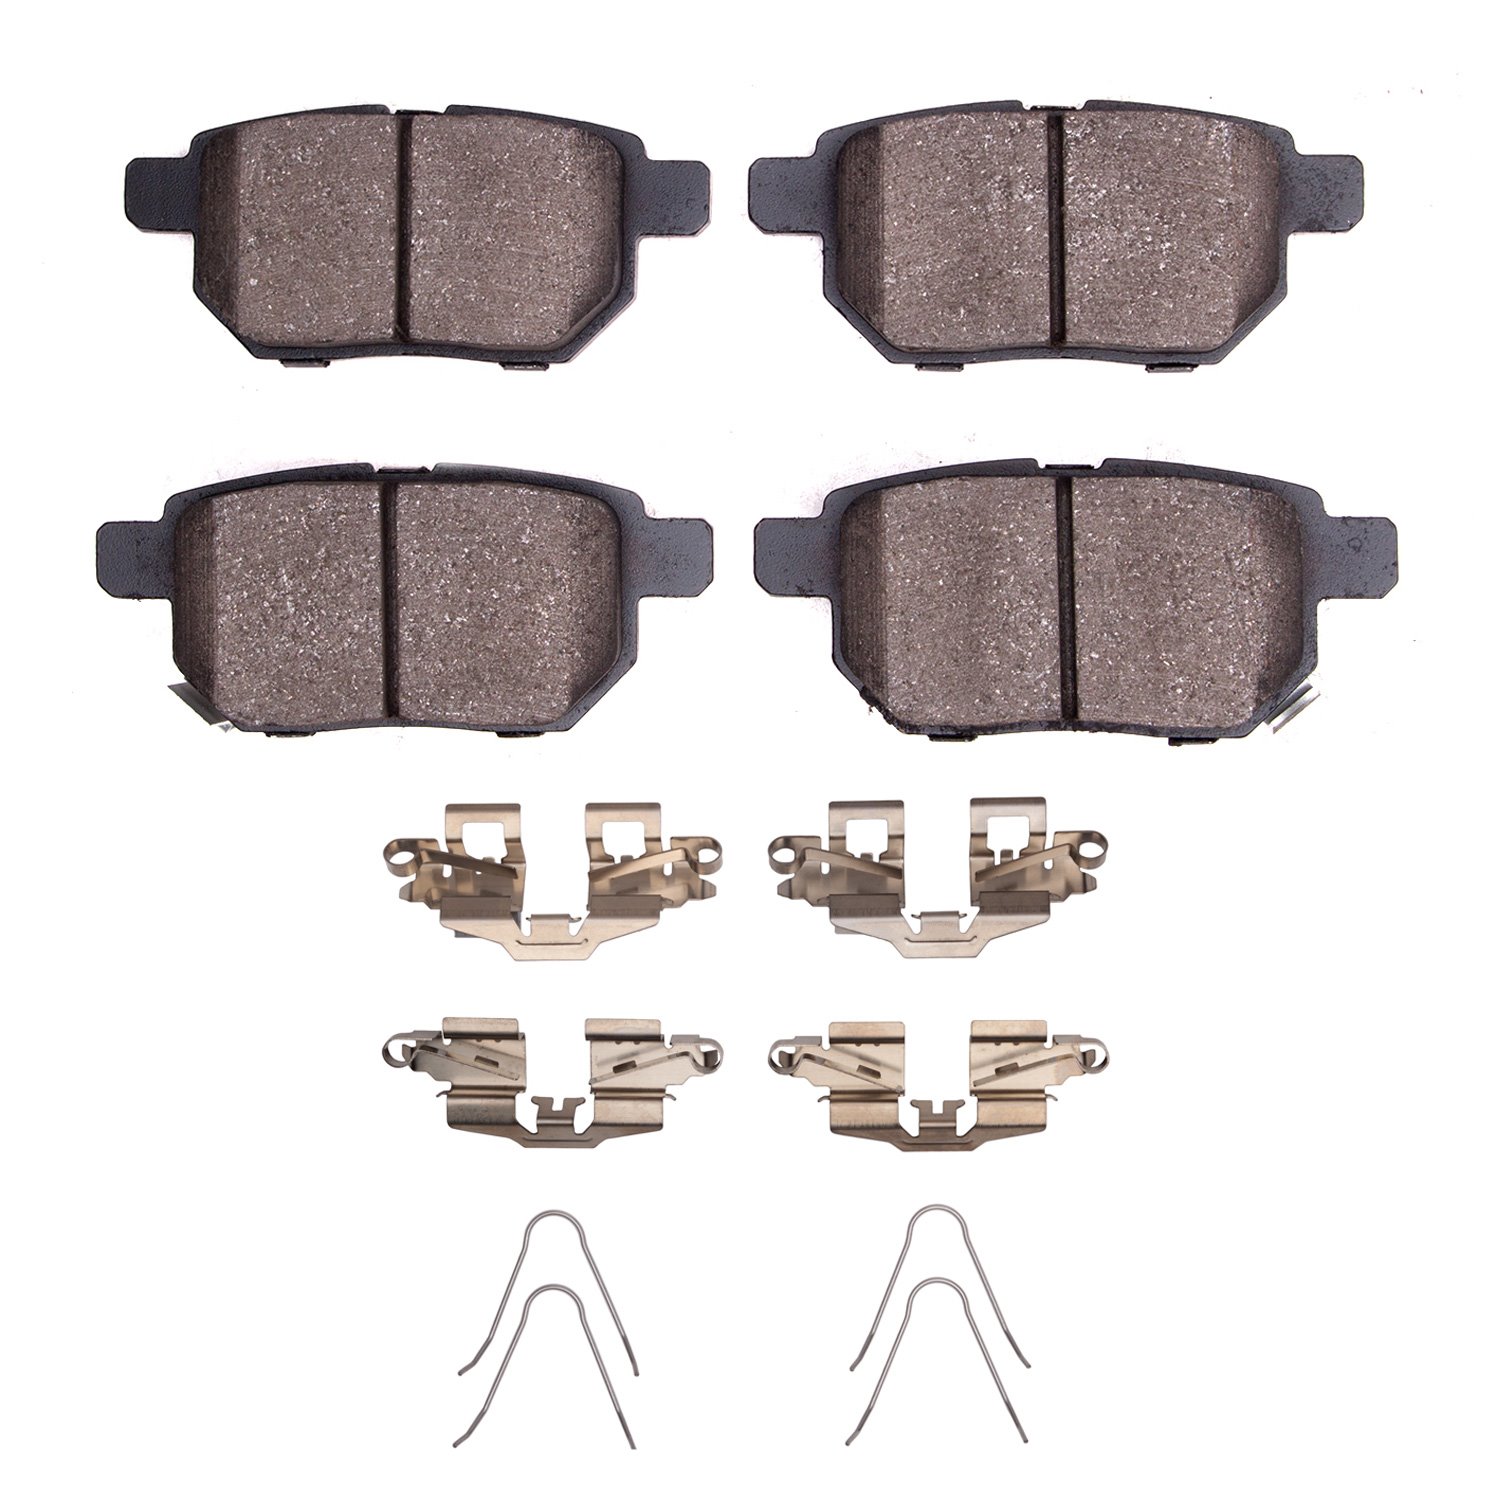 1551-1423-01 5000 Advanced Ceramic Brake Pads & Hardware Kit, Fits Select Multiple Makes/Models, Position: Rear